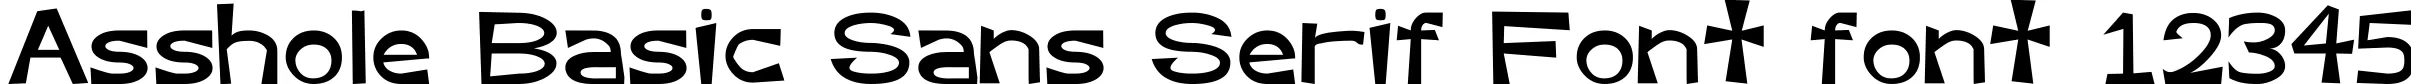 Dynamic Asshole Basic Sans Serif Font Font Preview https://safirsoft.com